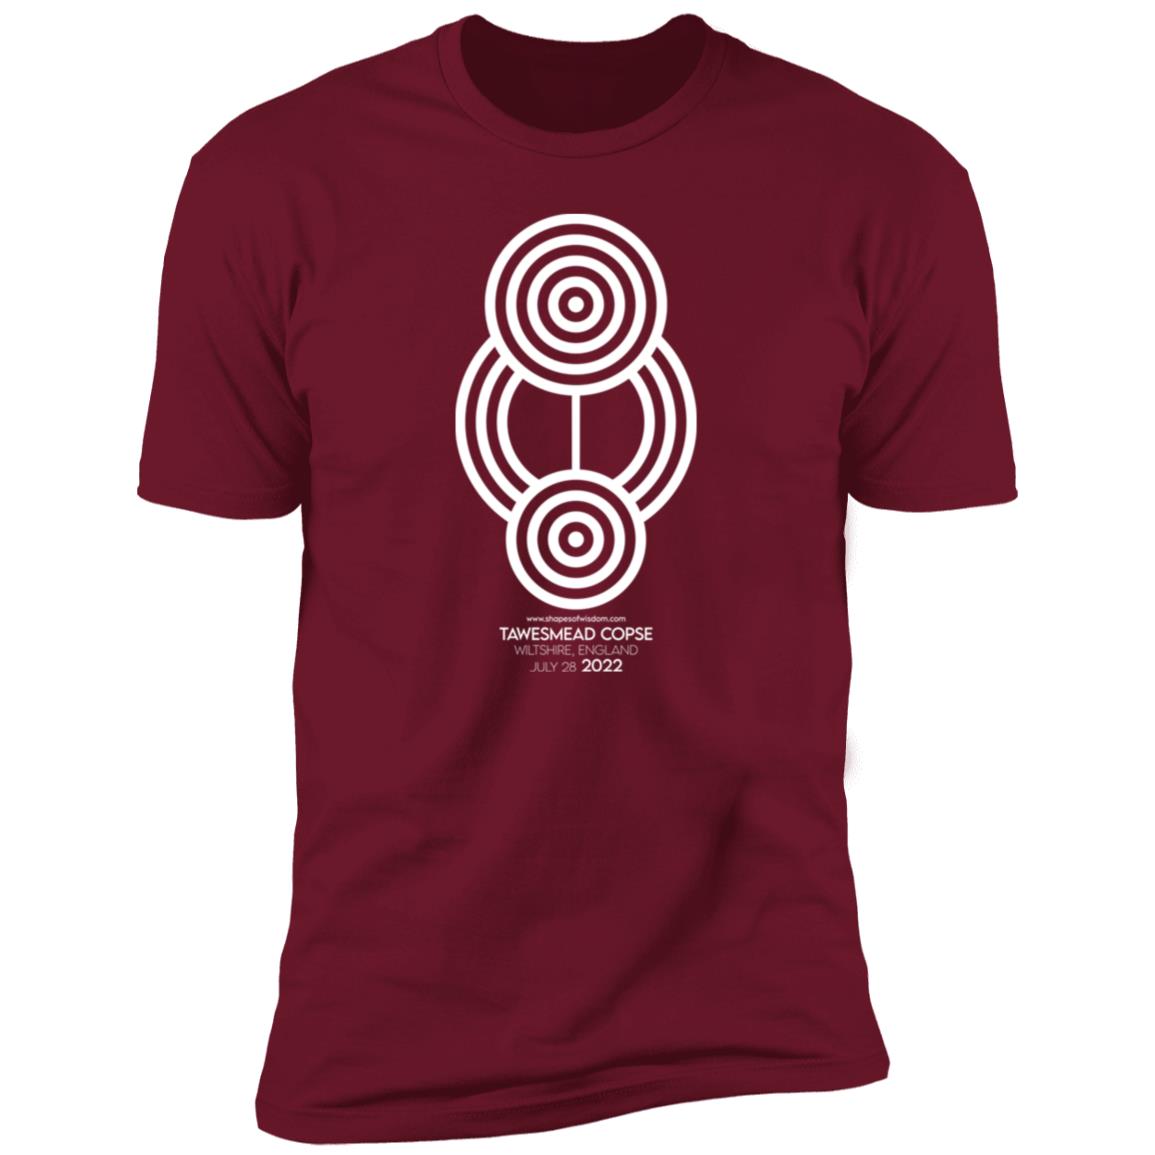 Crop Circle Premium T-Shirt - Tawesmead Copse